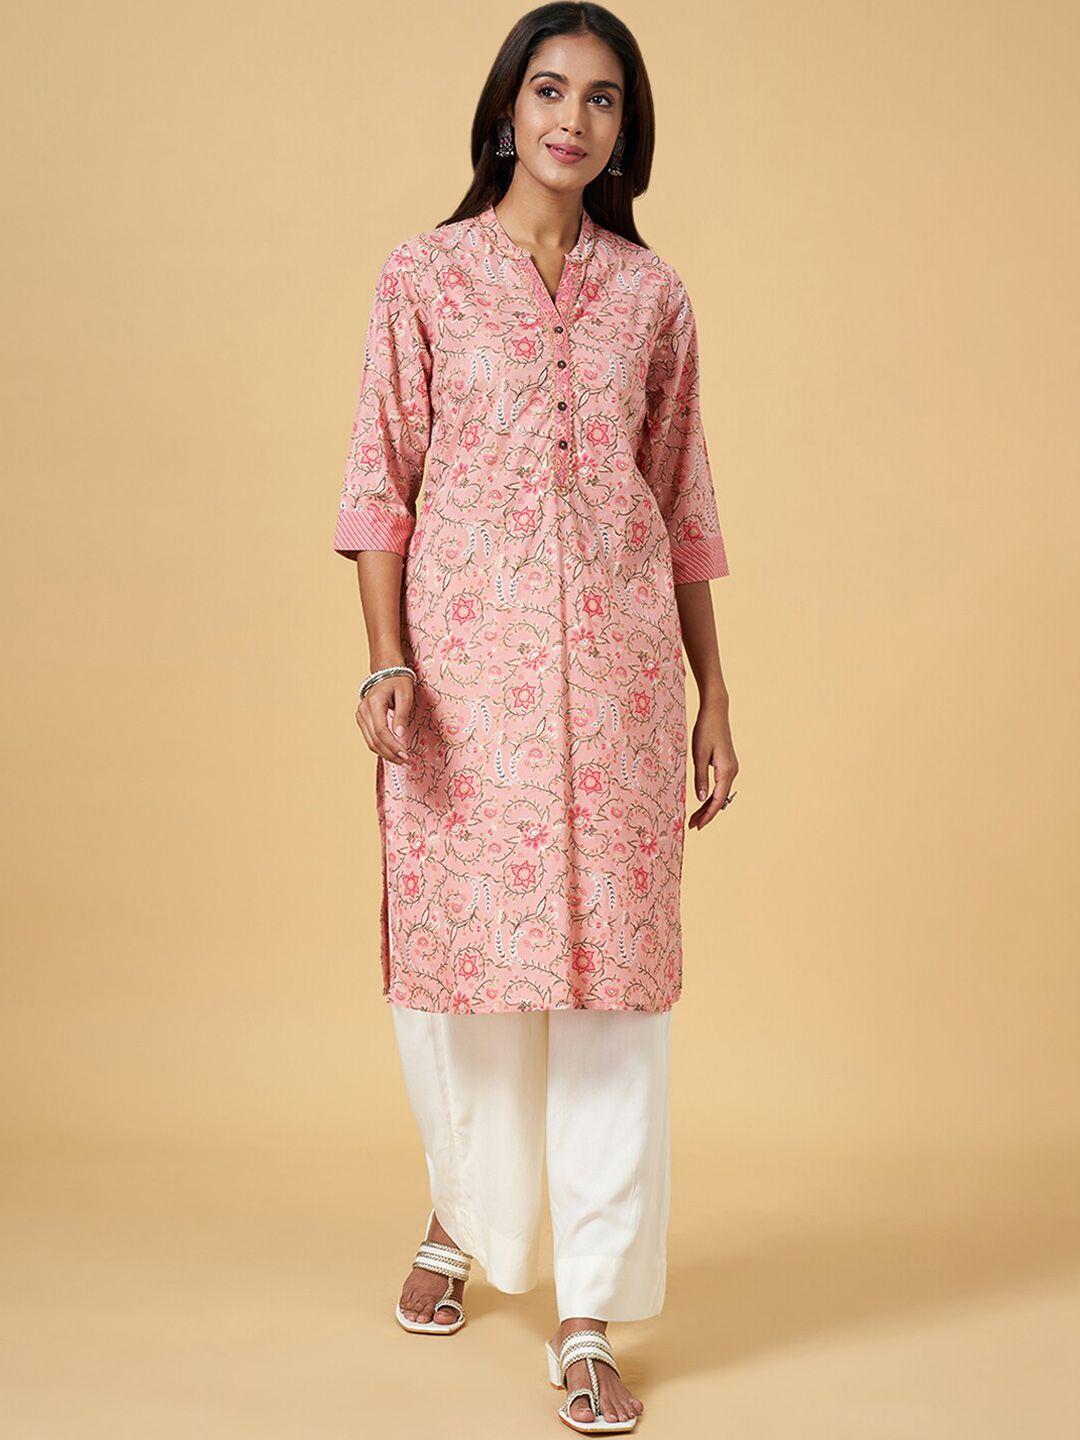 rangmanch-by-pantaloons-floral-printed-cotton-kurta